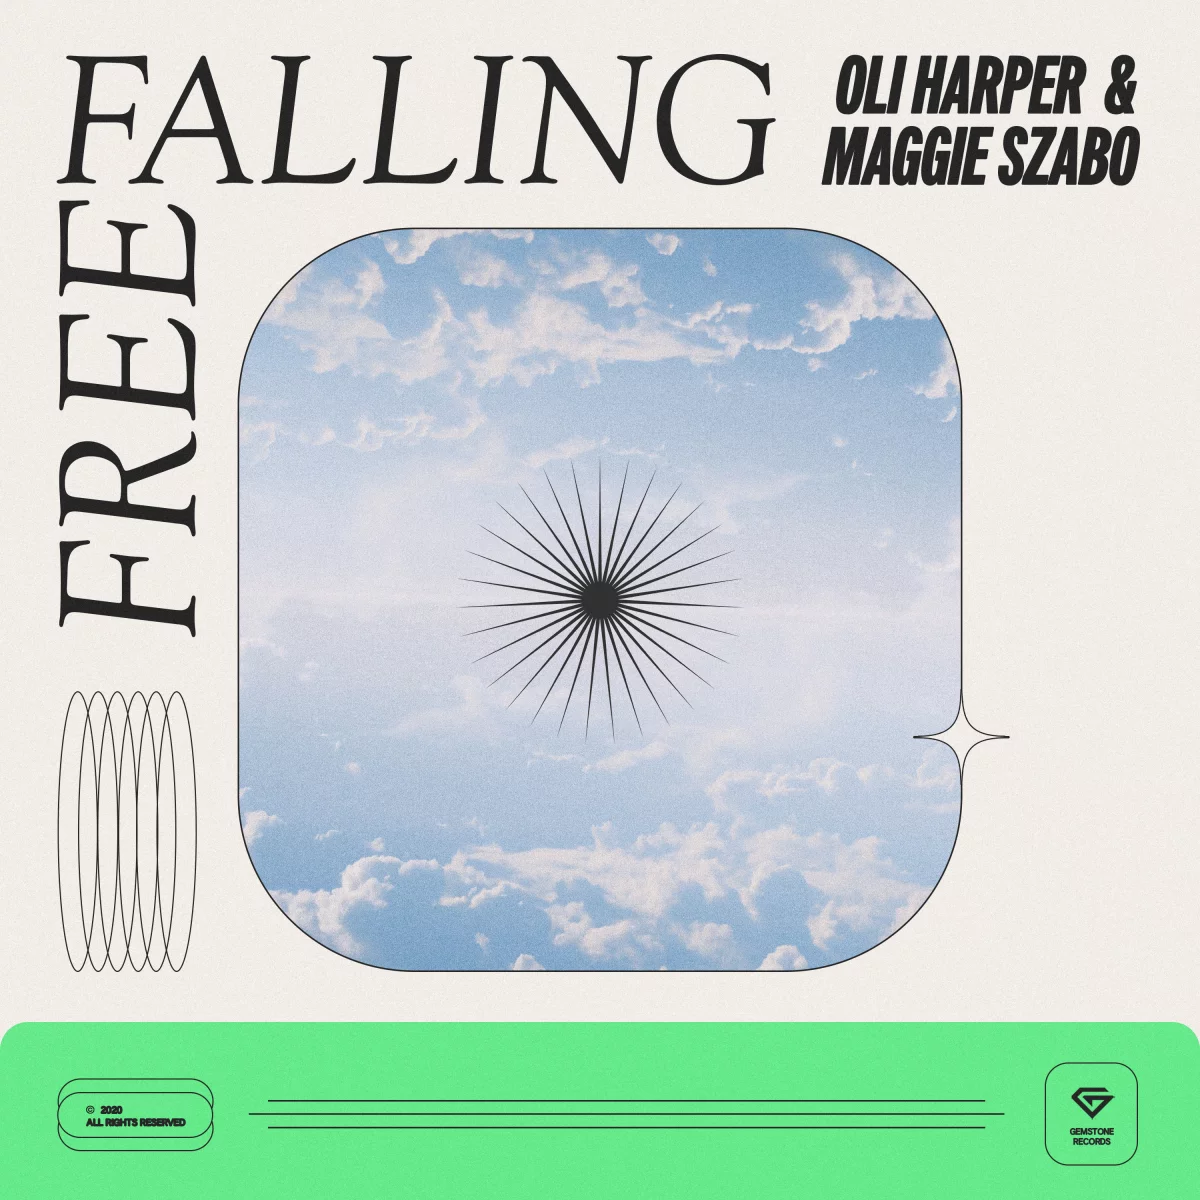 Free Falling - Oli Harper & Maggie Szabo